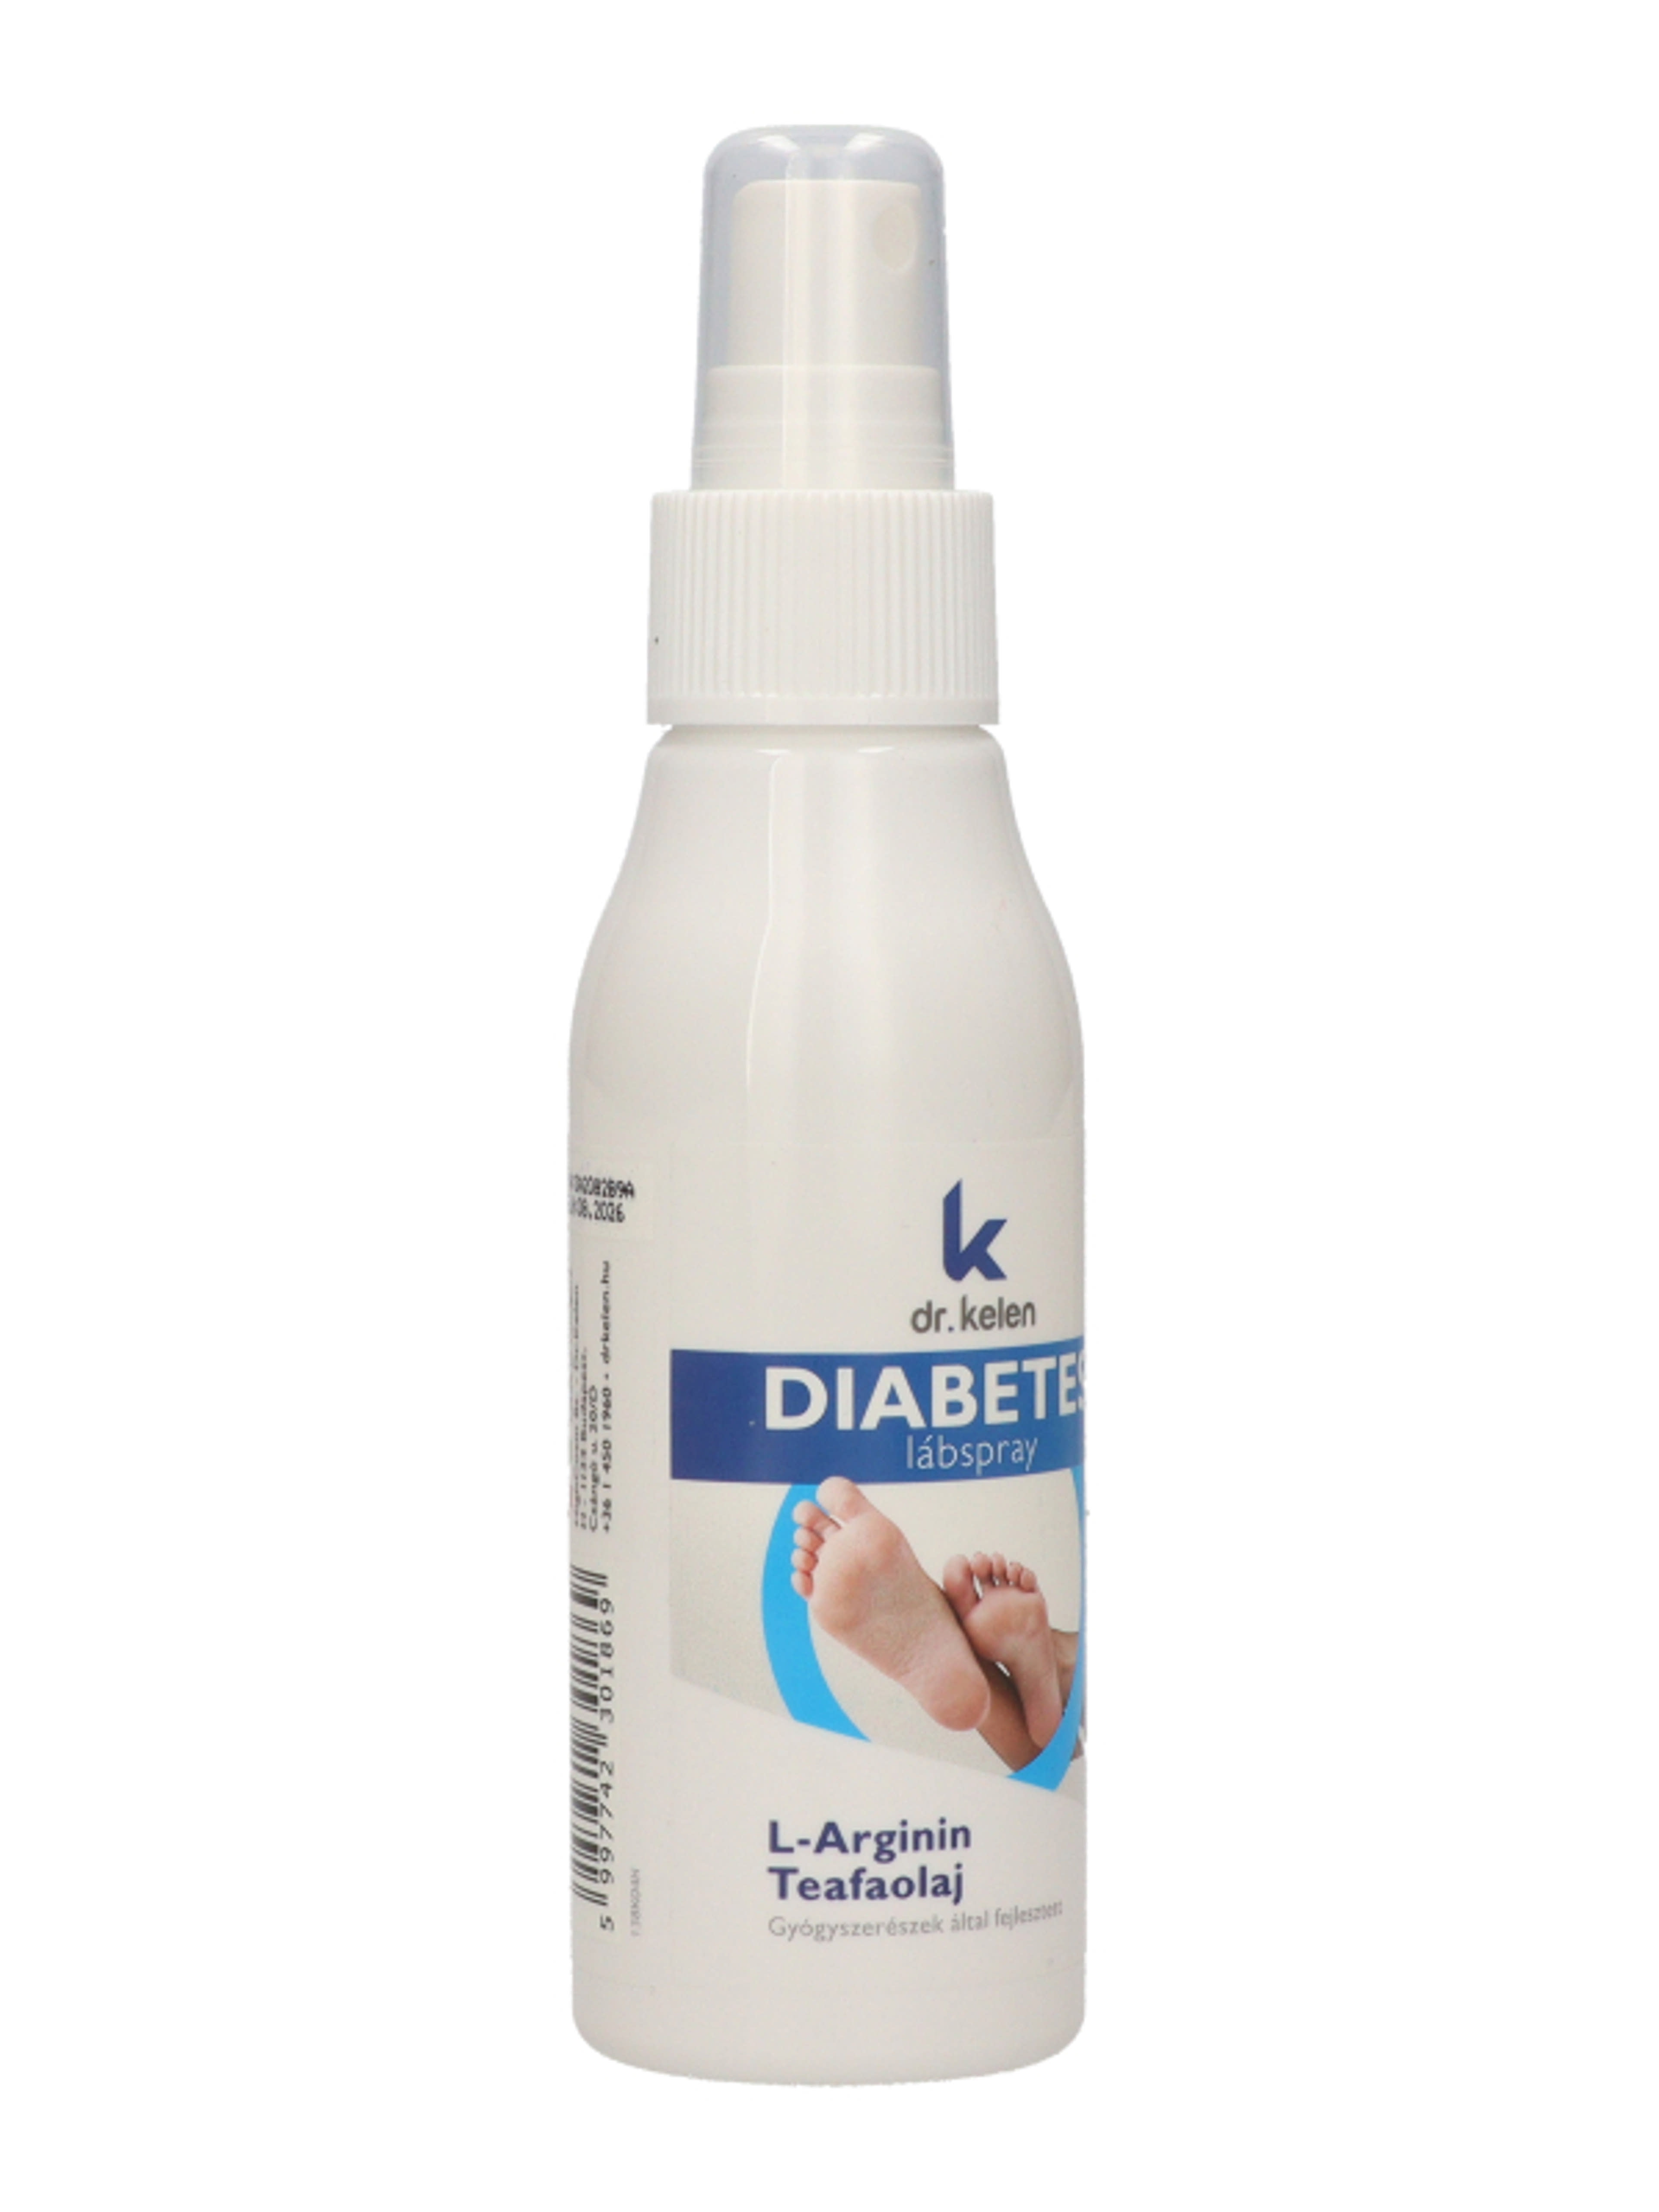 Dr. Kelen labspray diabetes - 100 ml-5